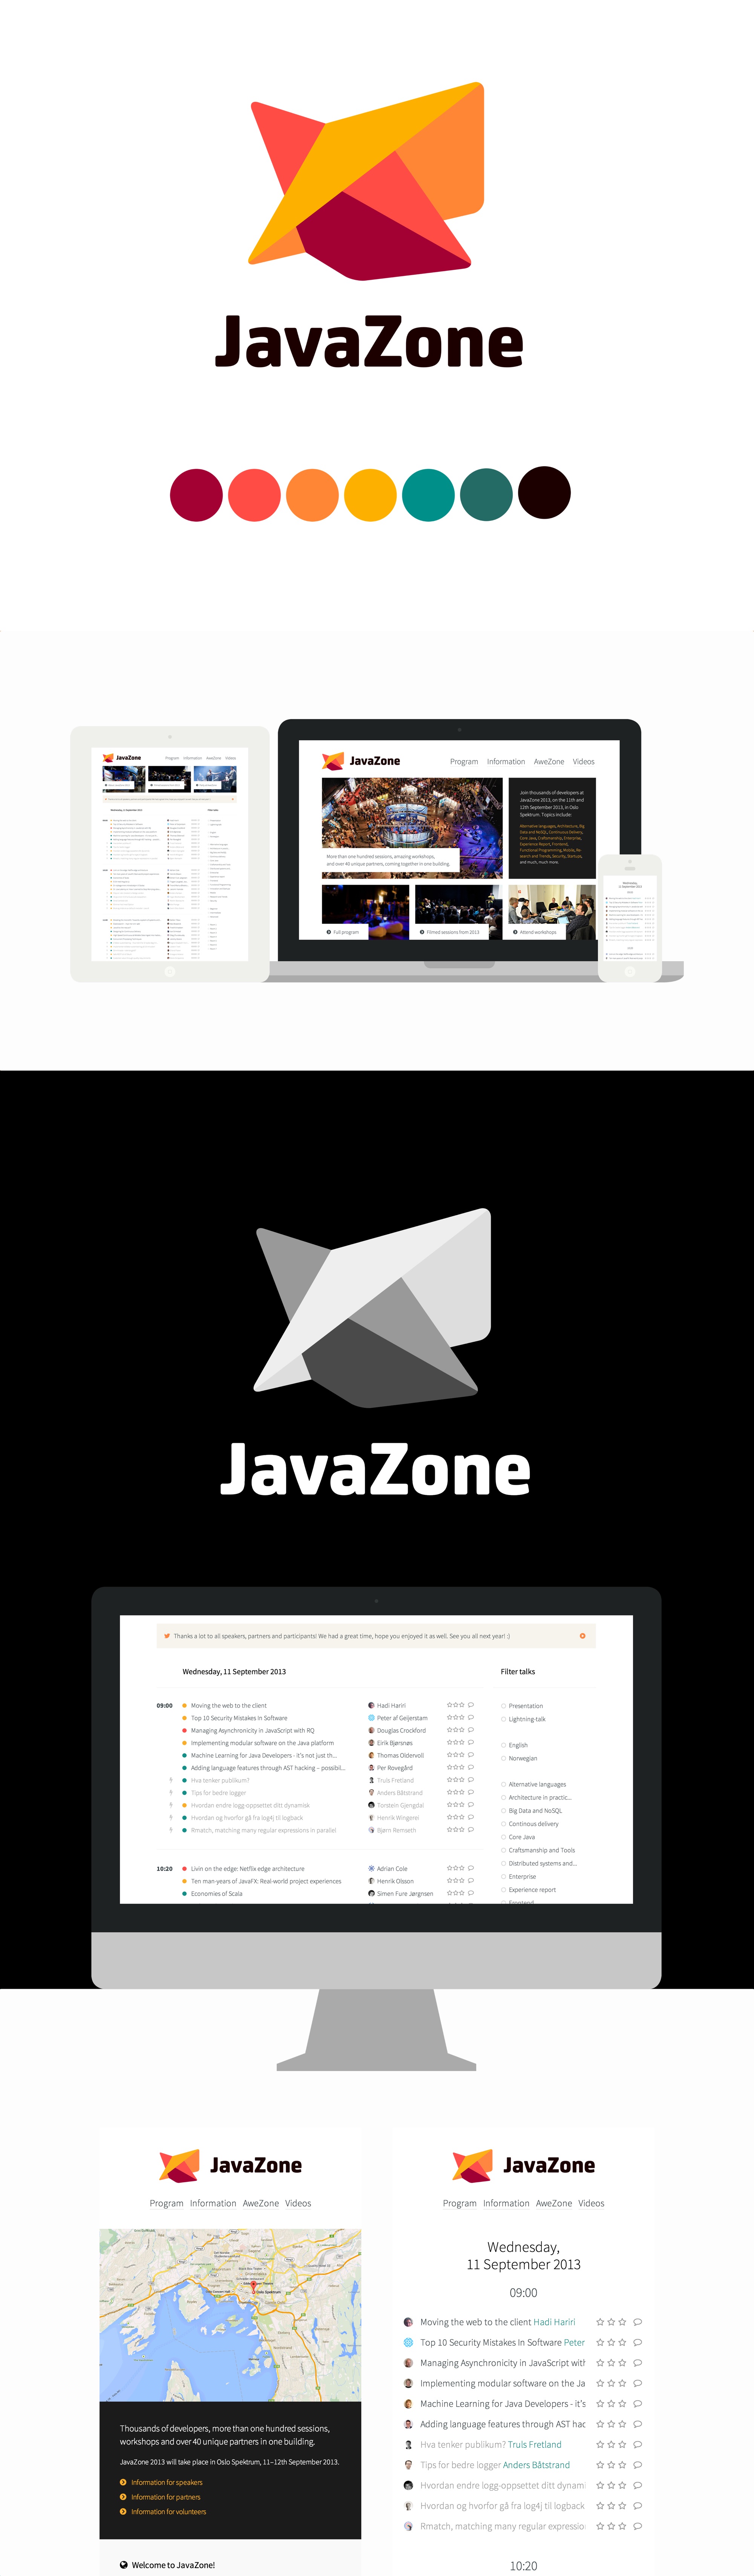 Logo, color scheme, and website device screenshots